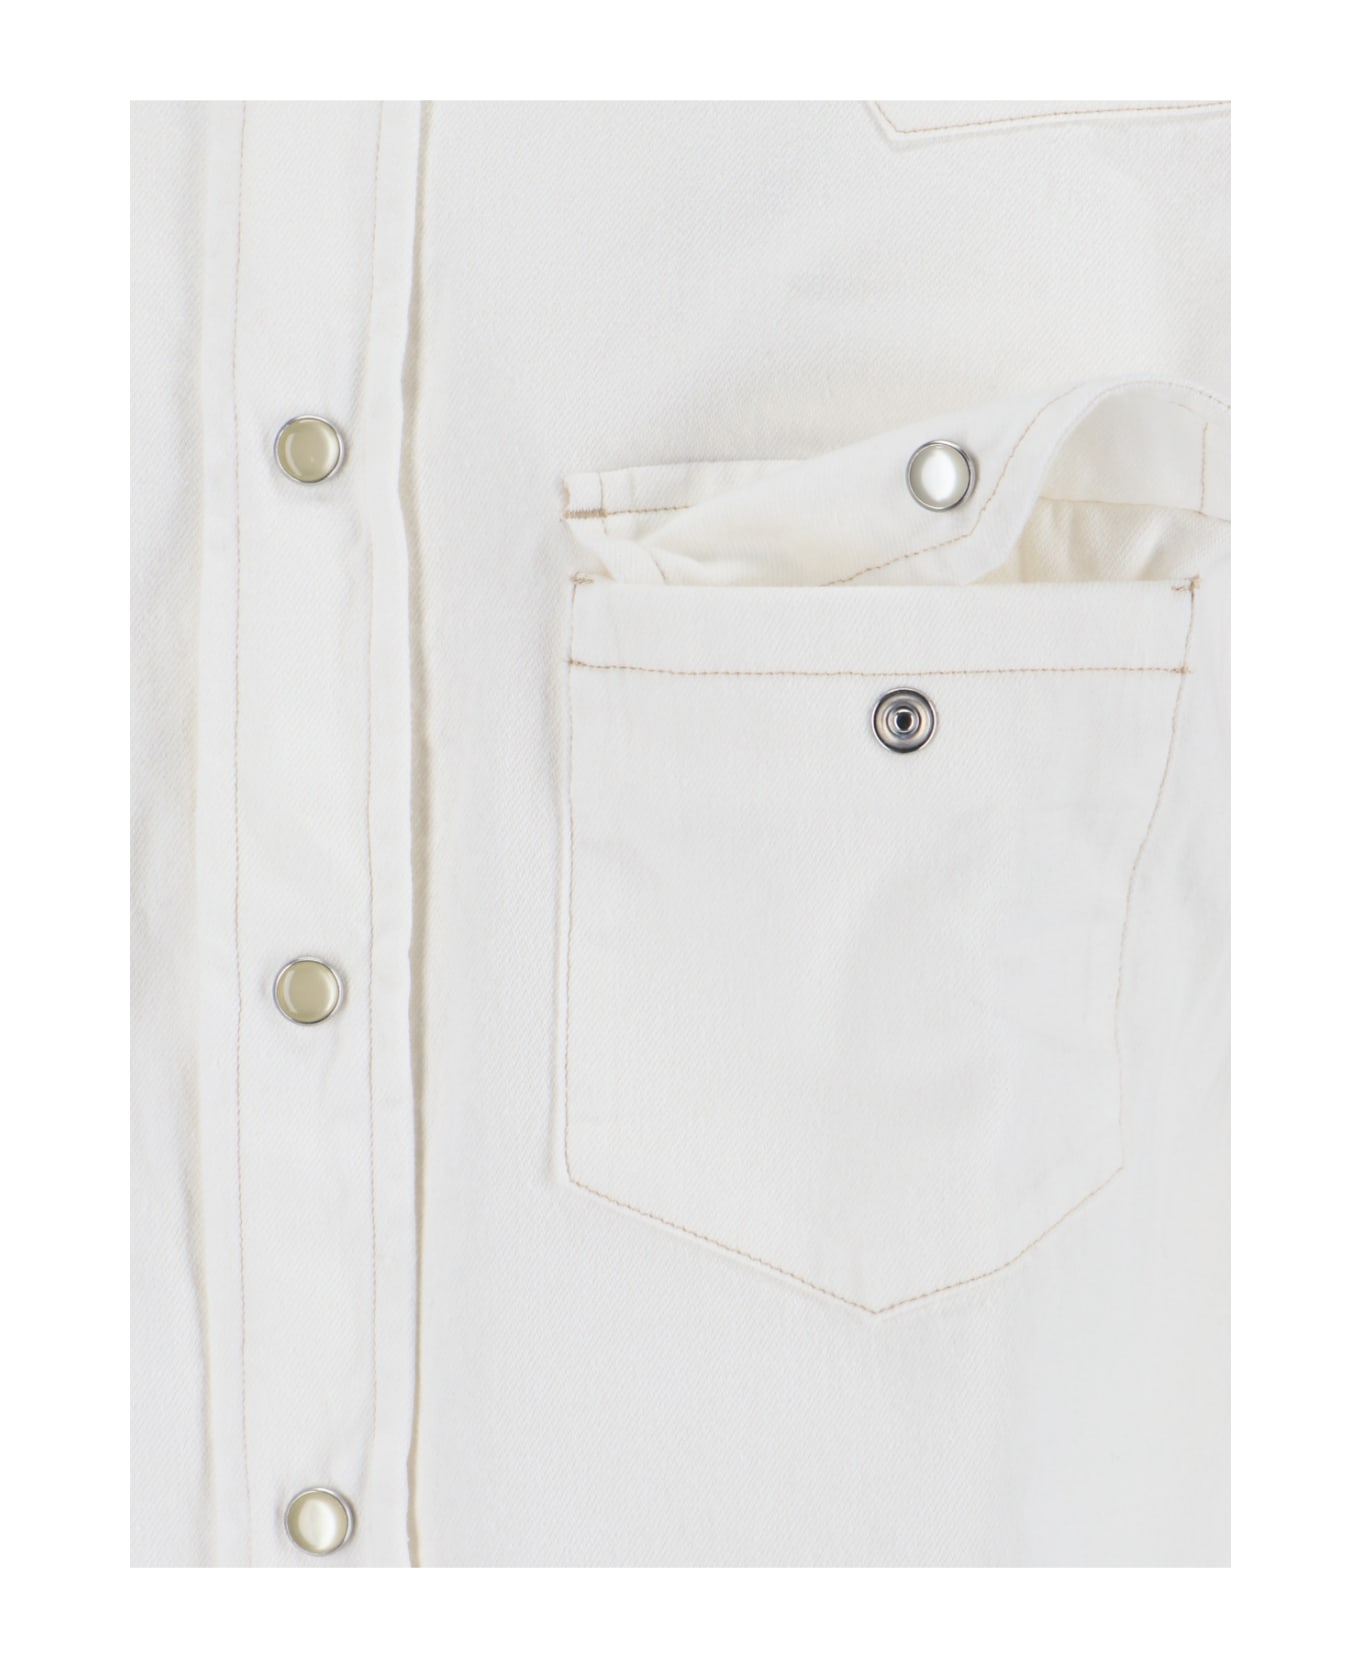 Tom Ford Denim Shirt - White